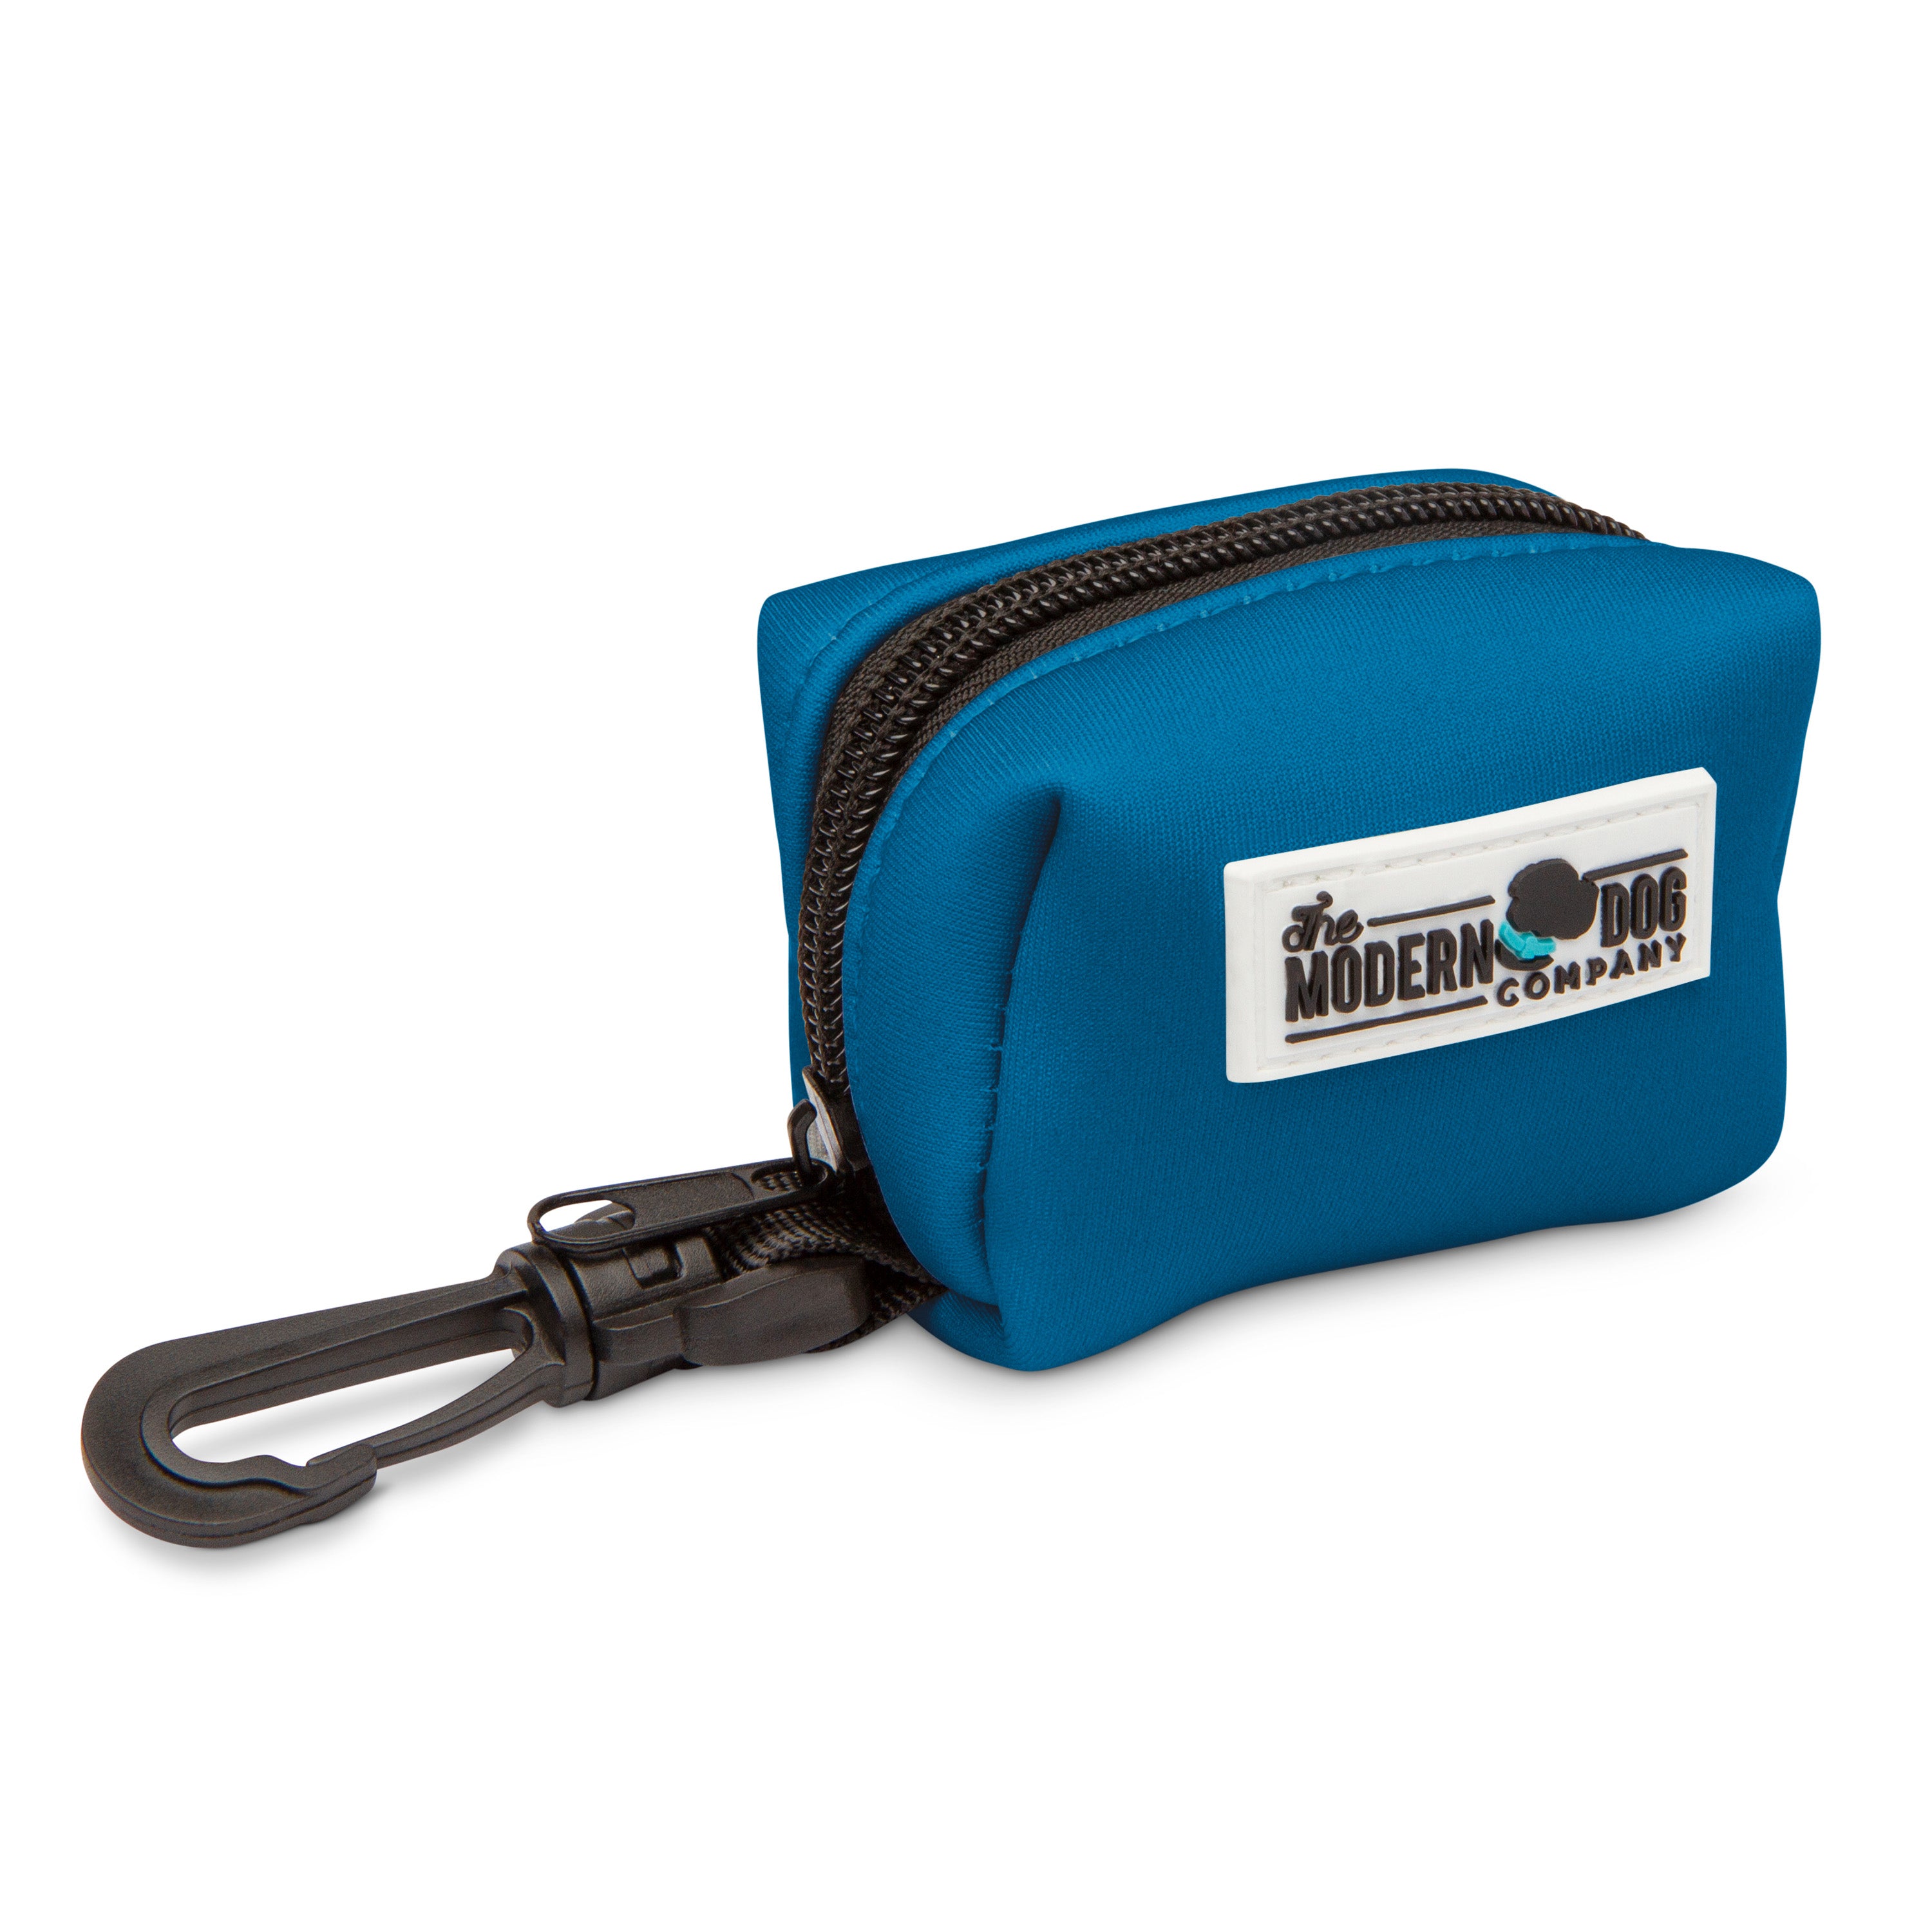 The Modern Dog Company - Retro Blue Poop Bag Holder